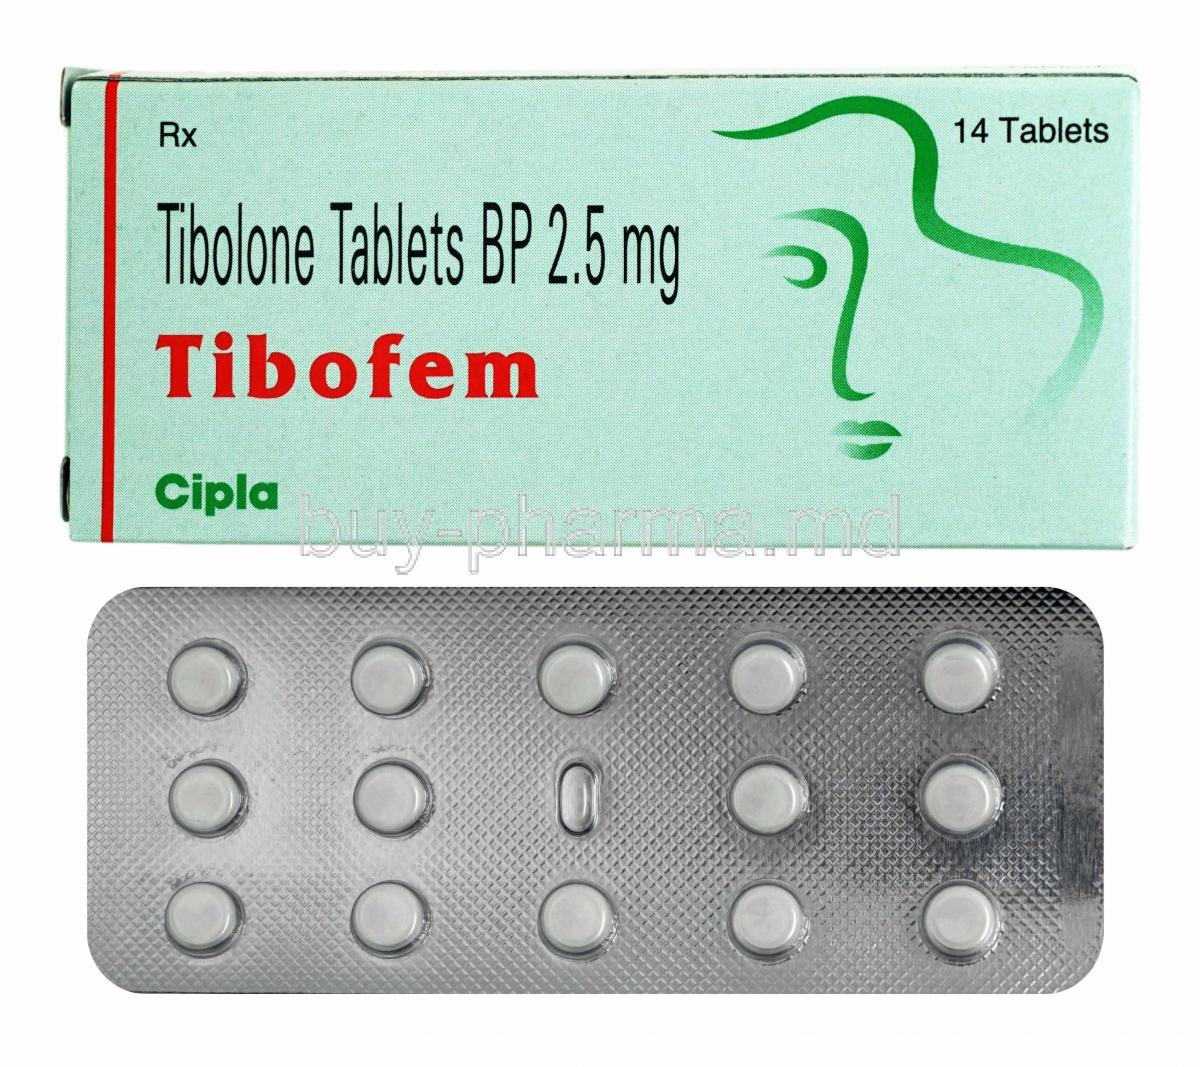 Tibofem, Tibolone 2.5mg box and tablets